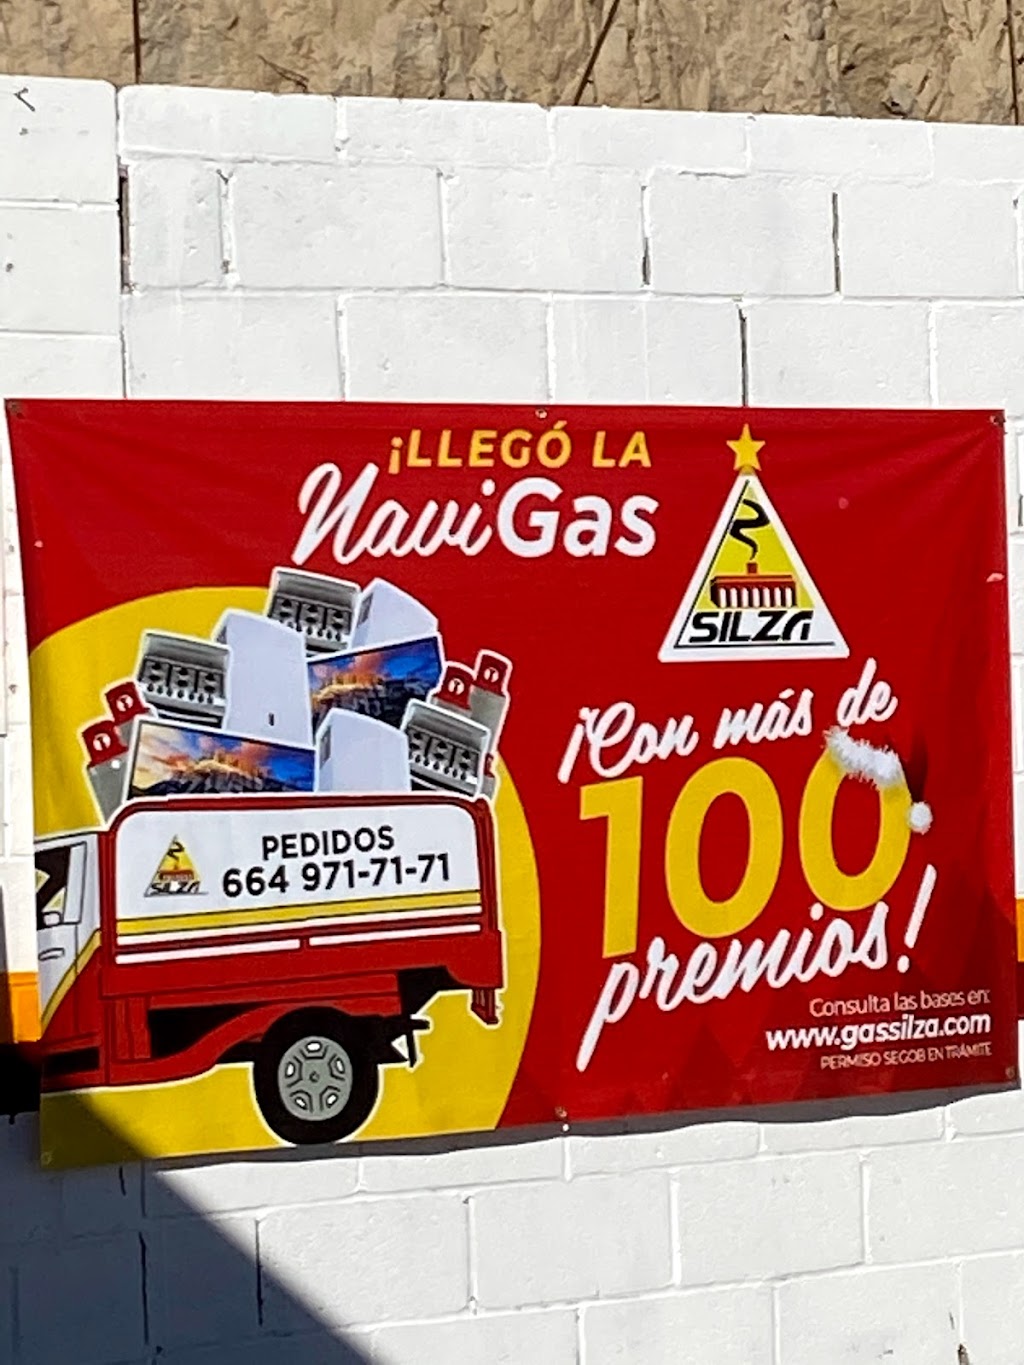 Gas Silza Joya | Calle Miguel Hidalgo 35A, La Gloria, 22645 La Joya, B.C., Mexico | Phone: 9717171